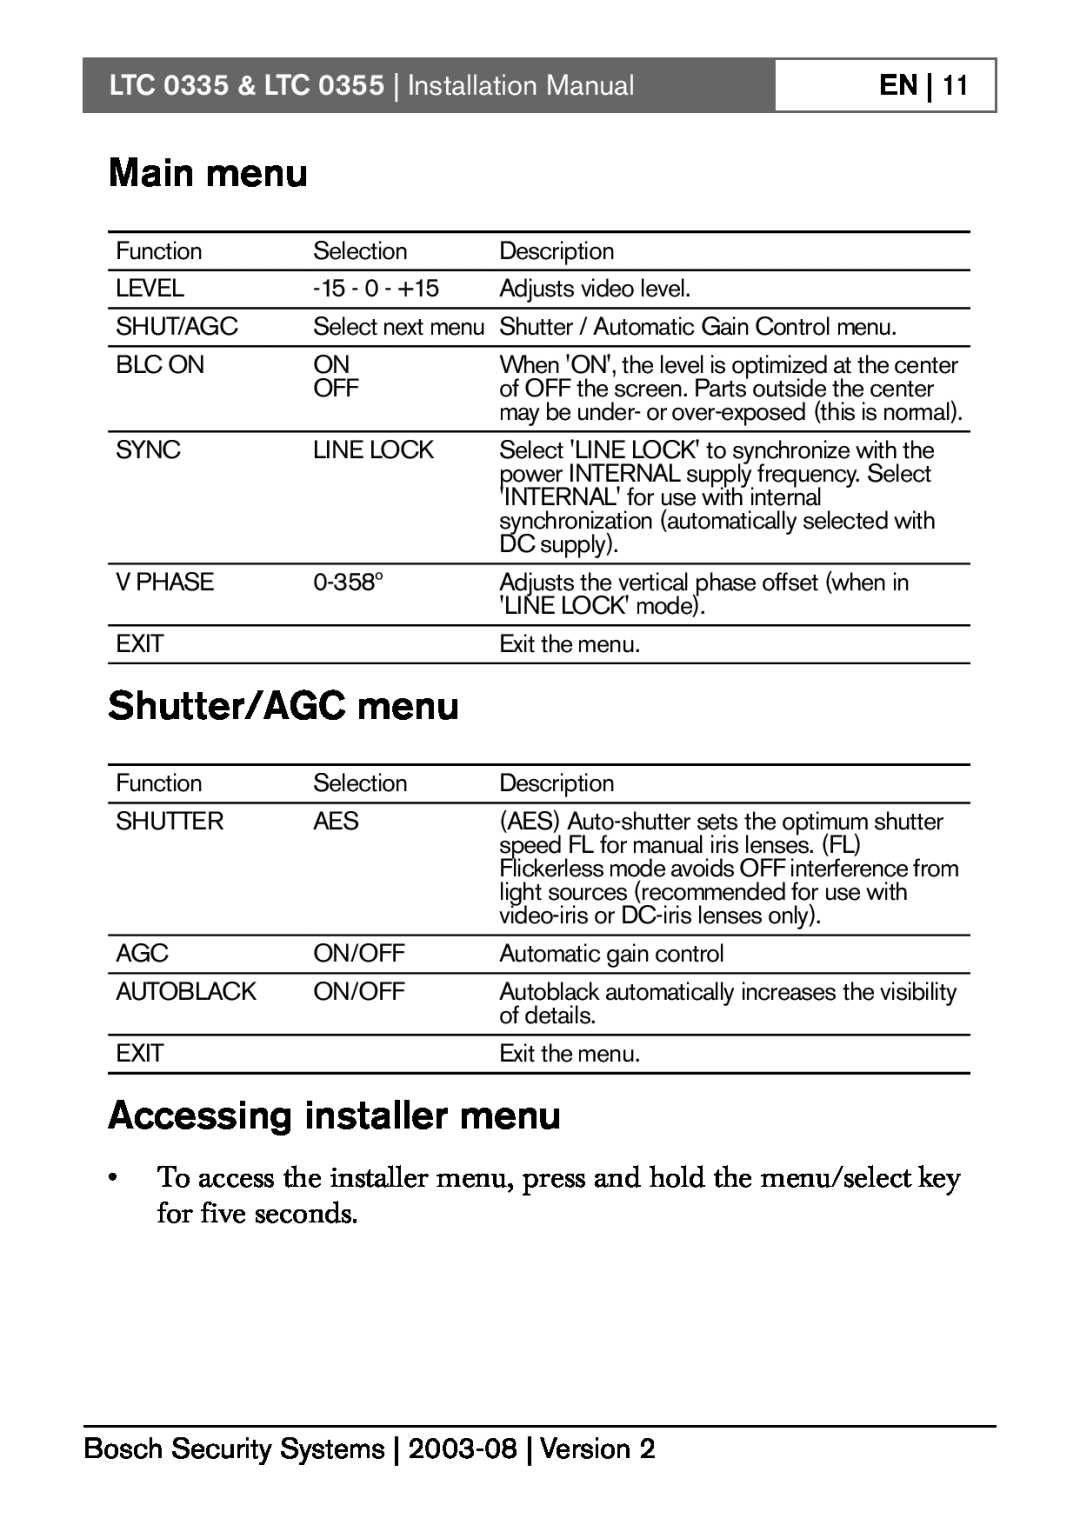 Bosch Appliances Main menu, Shutter/AGC menu, Accessing installer menu, LTC 0335 & LTC 0355 Installation Manual, En 